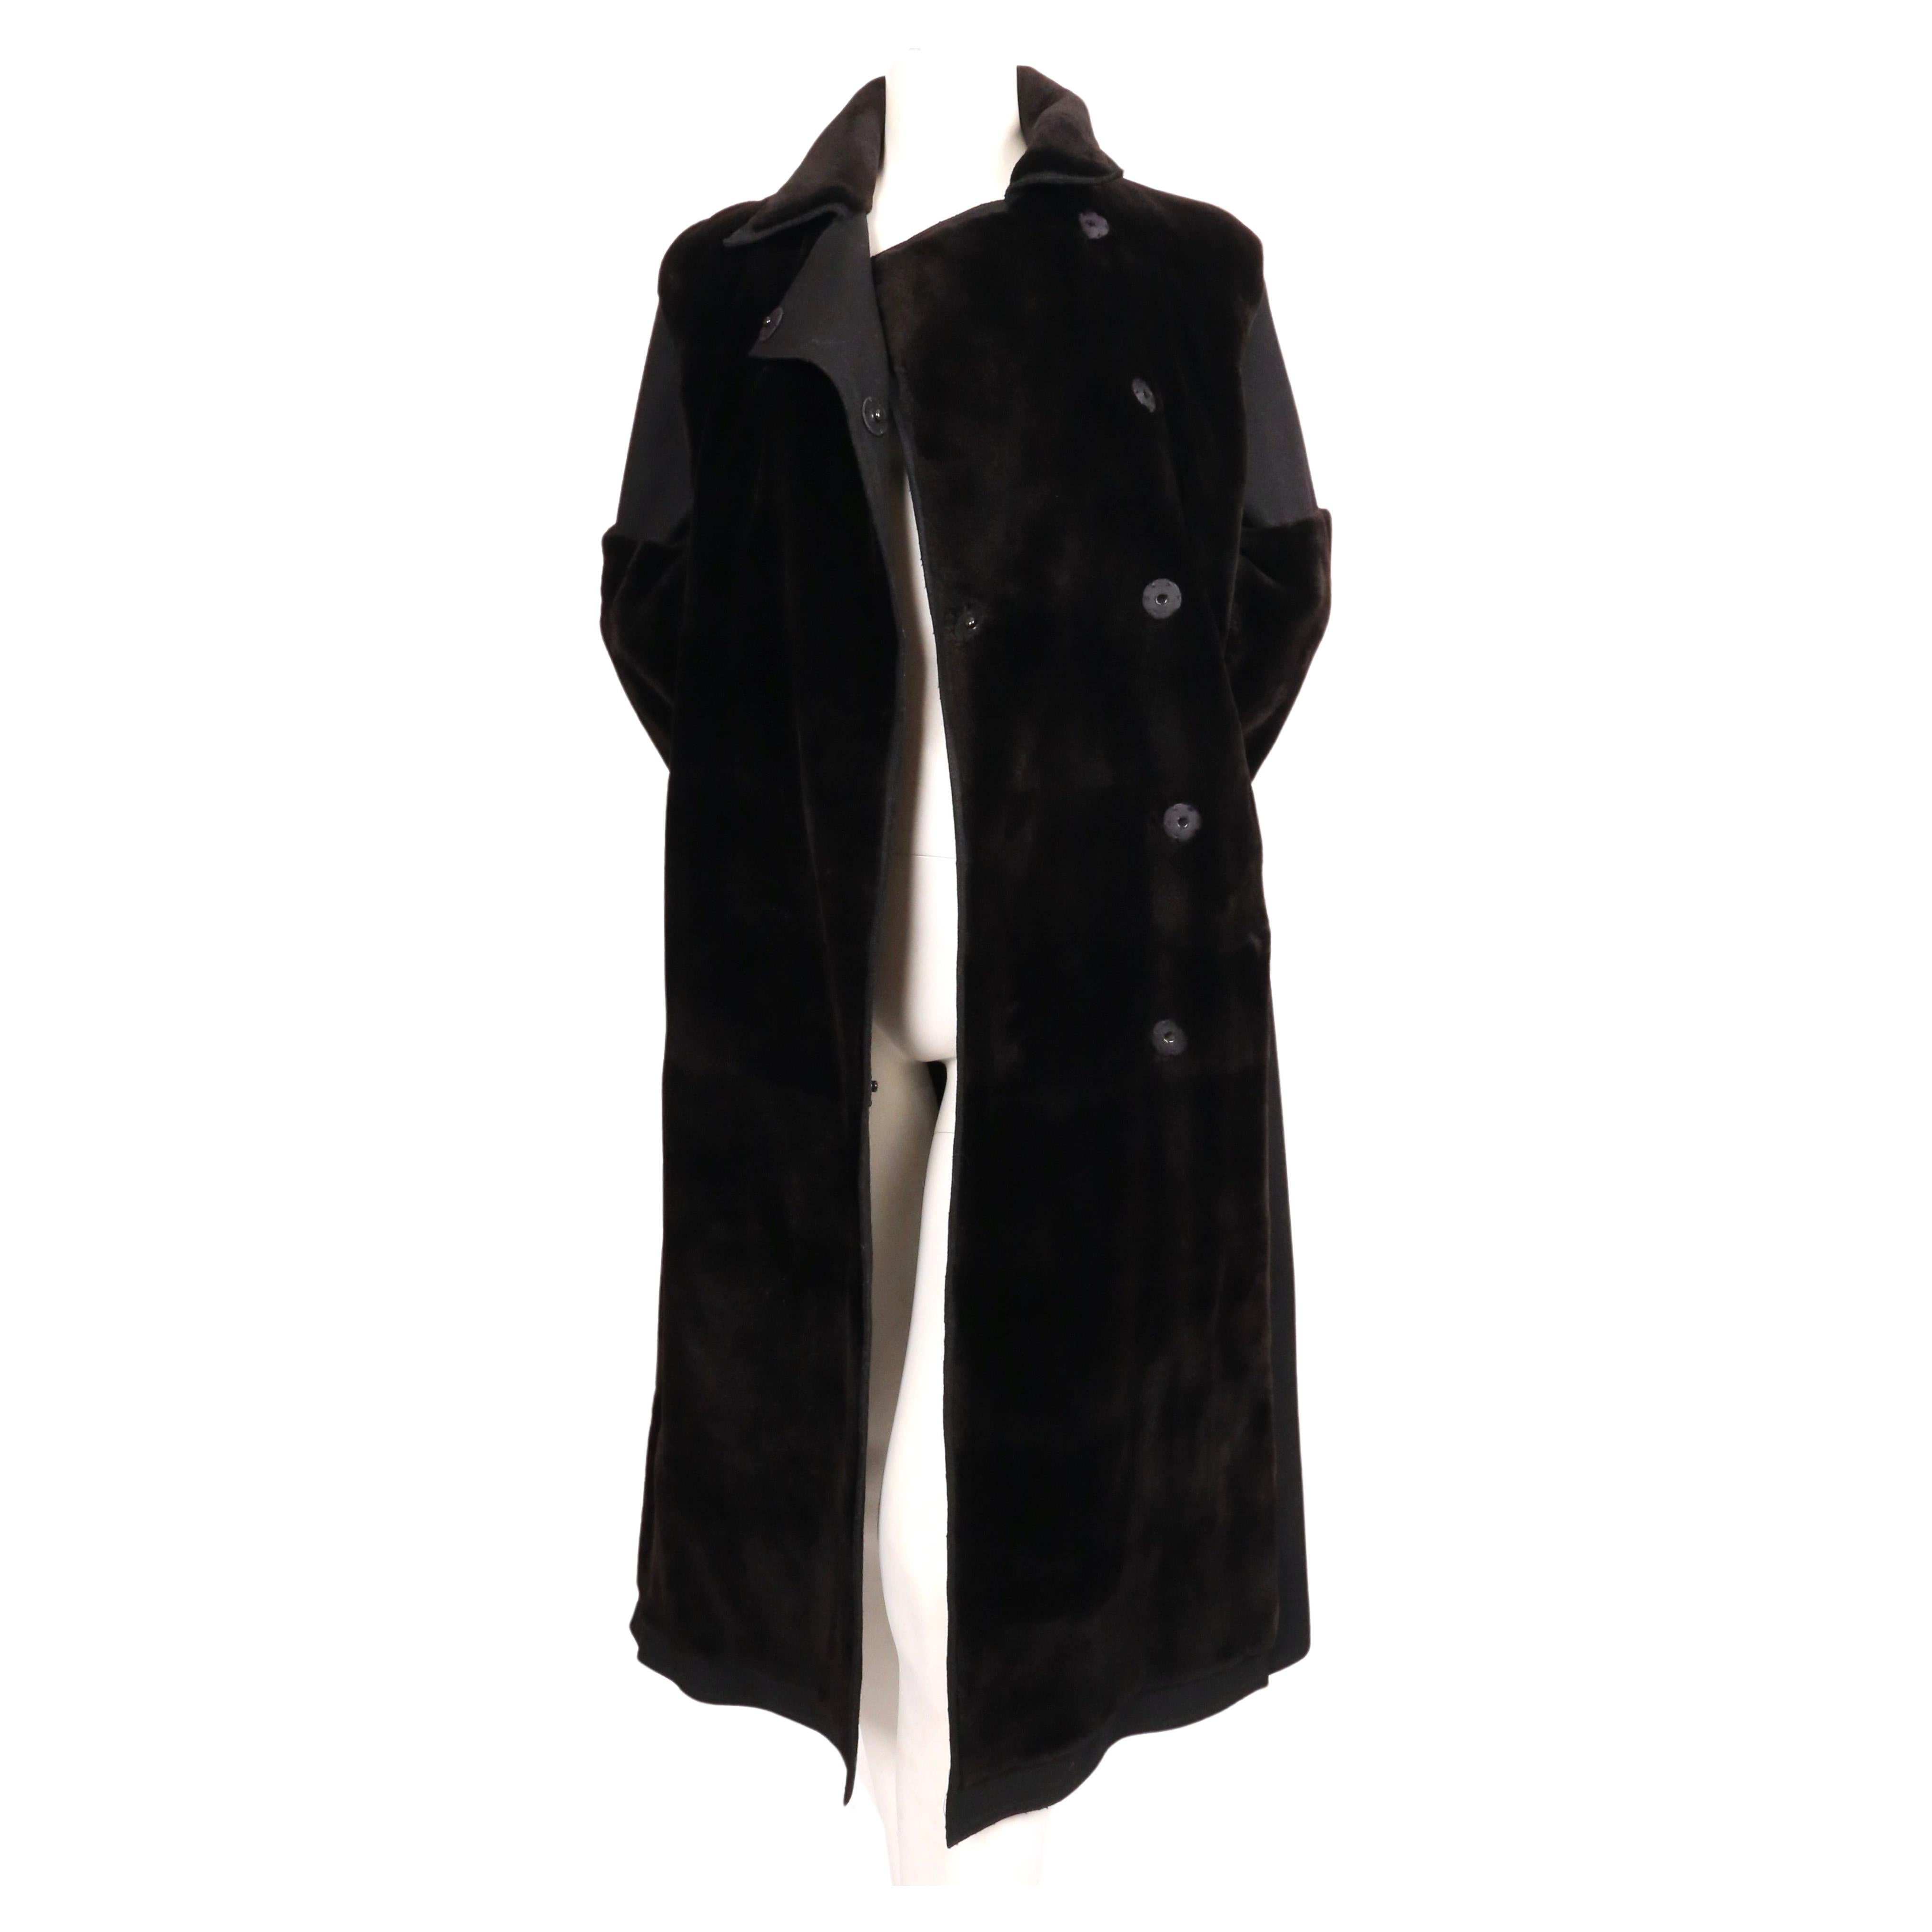 J. MENDEL dark brown mink fur coat with black wool panels In Good Condition For Sale In San Fransisco, CA